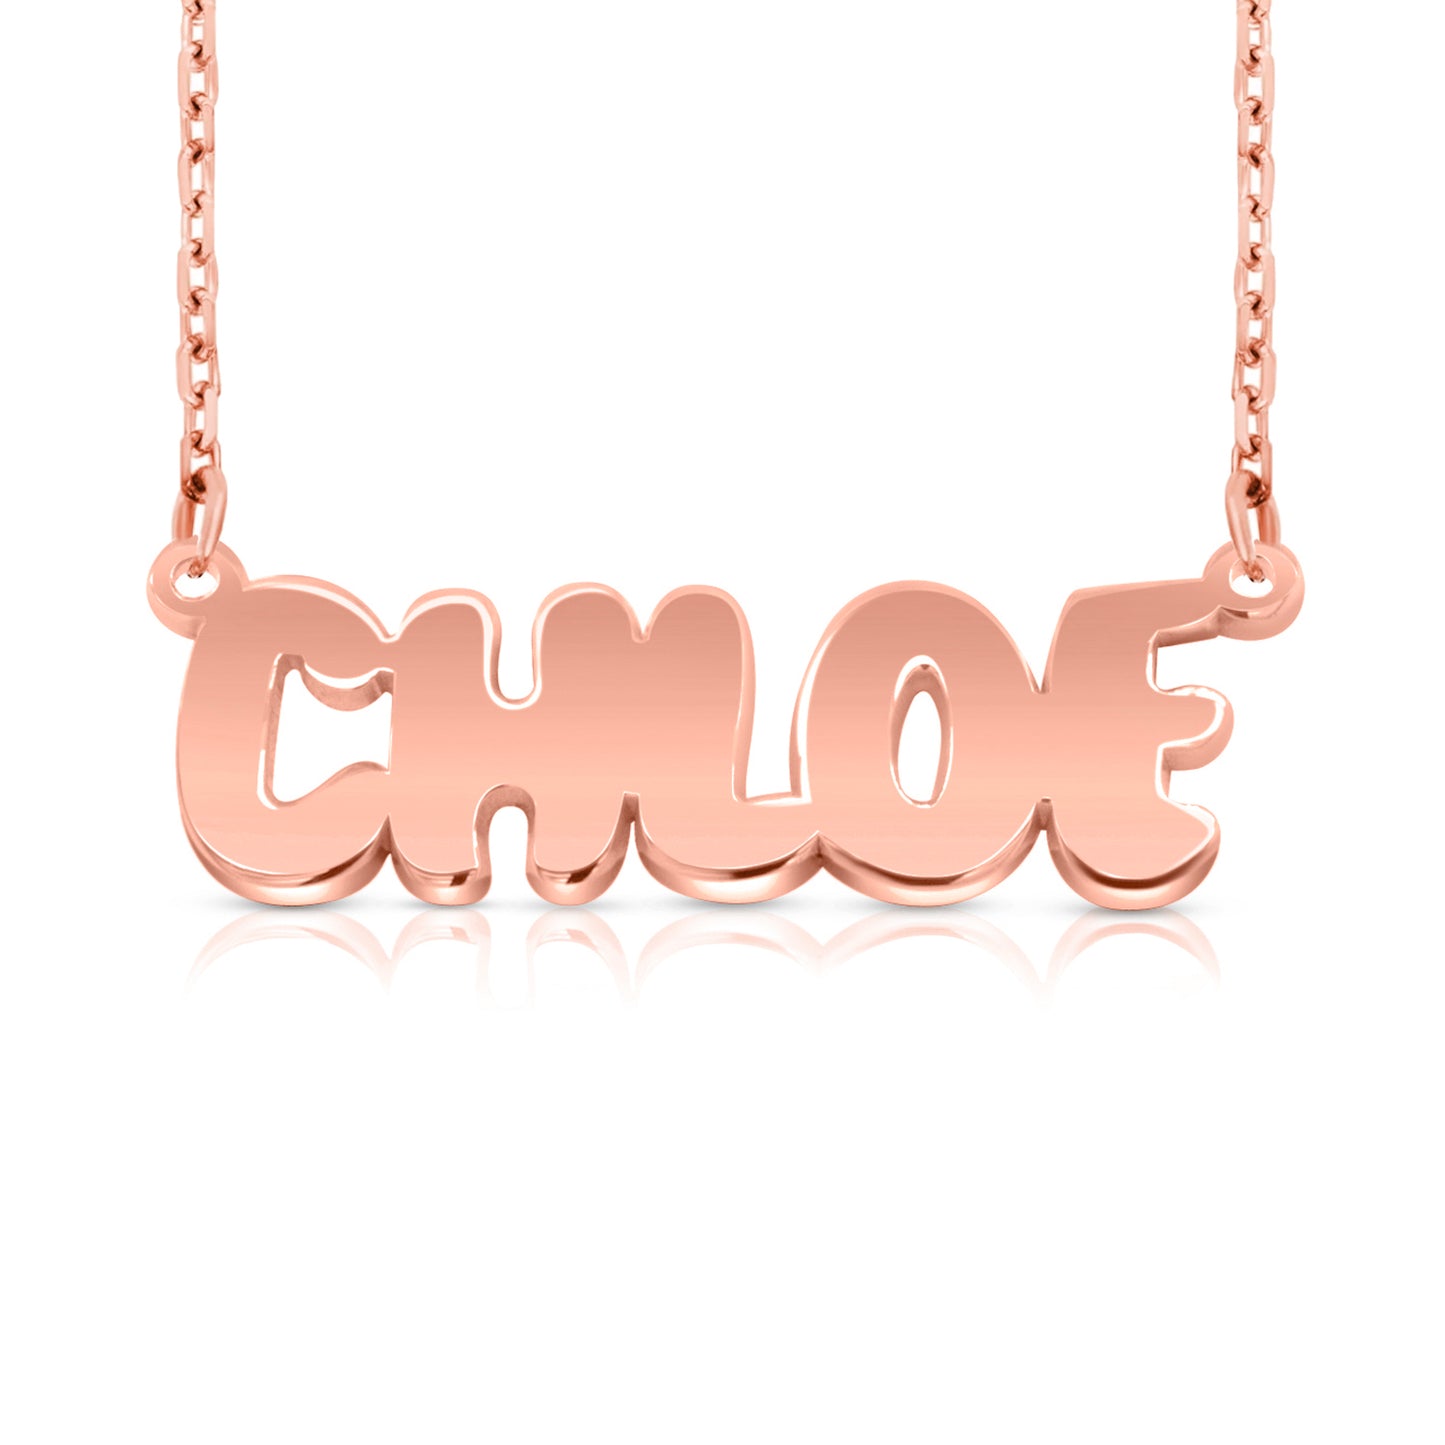 14 Karat "Chloe" Style Nameplate